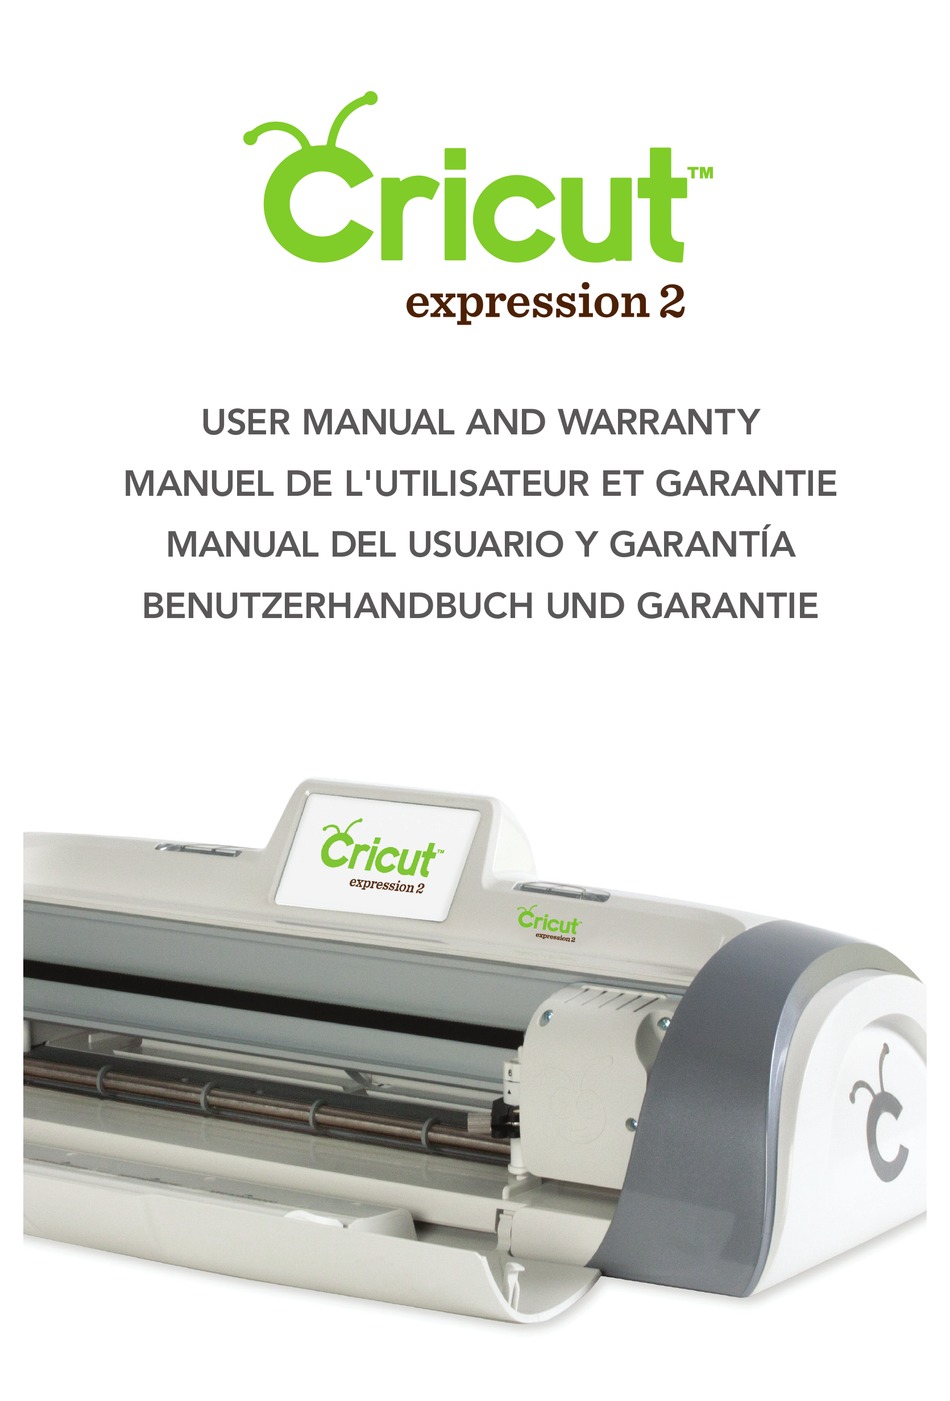 Cricut expression 2 User Manual and Warranty: Cricut